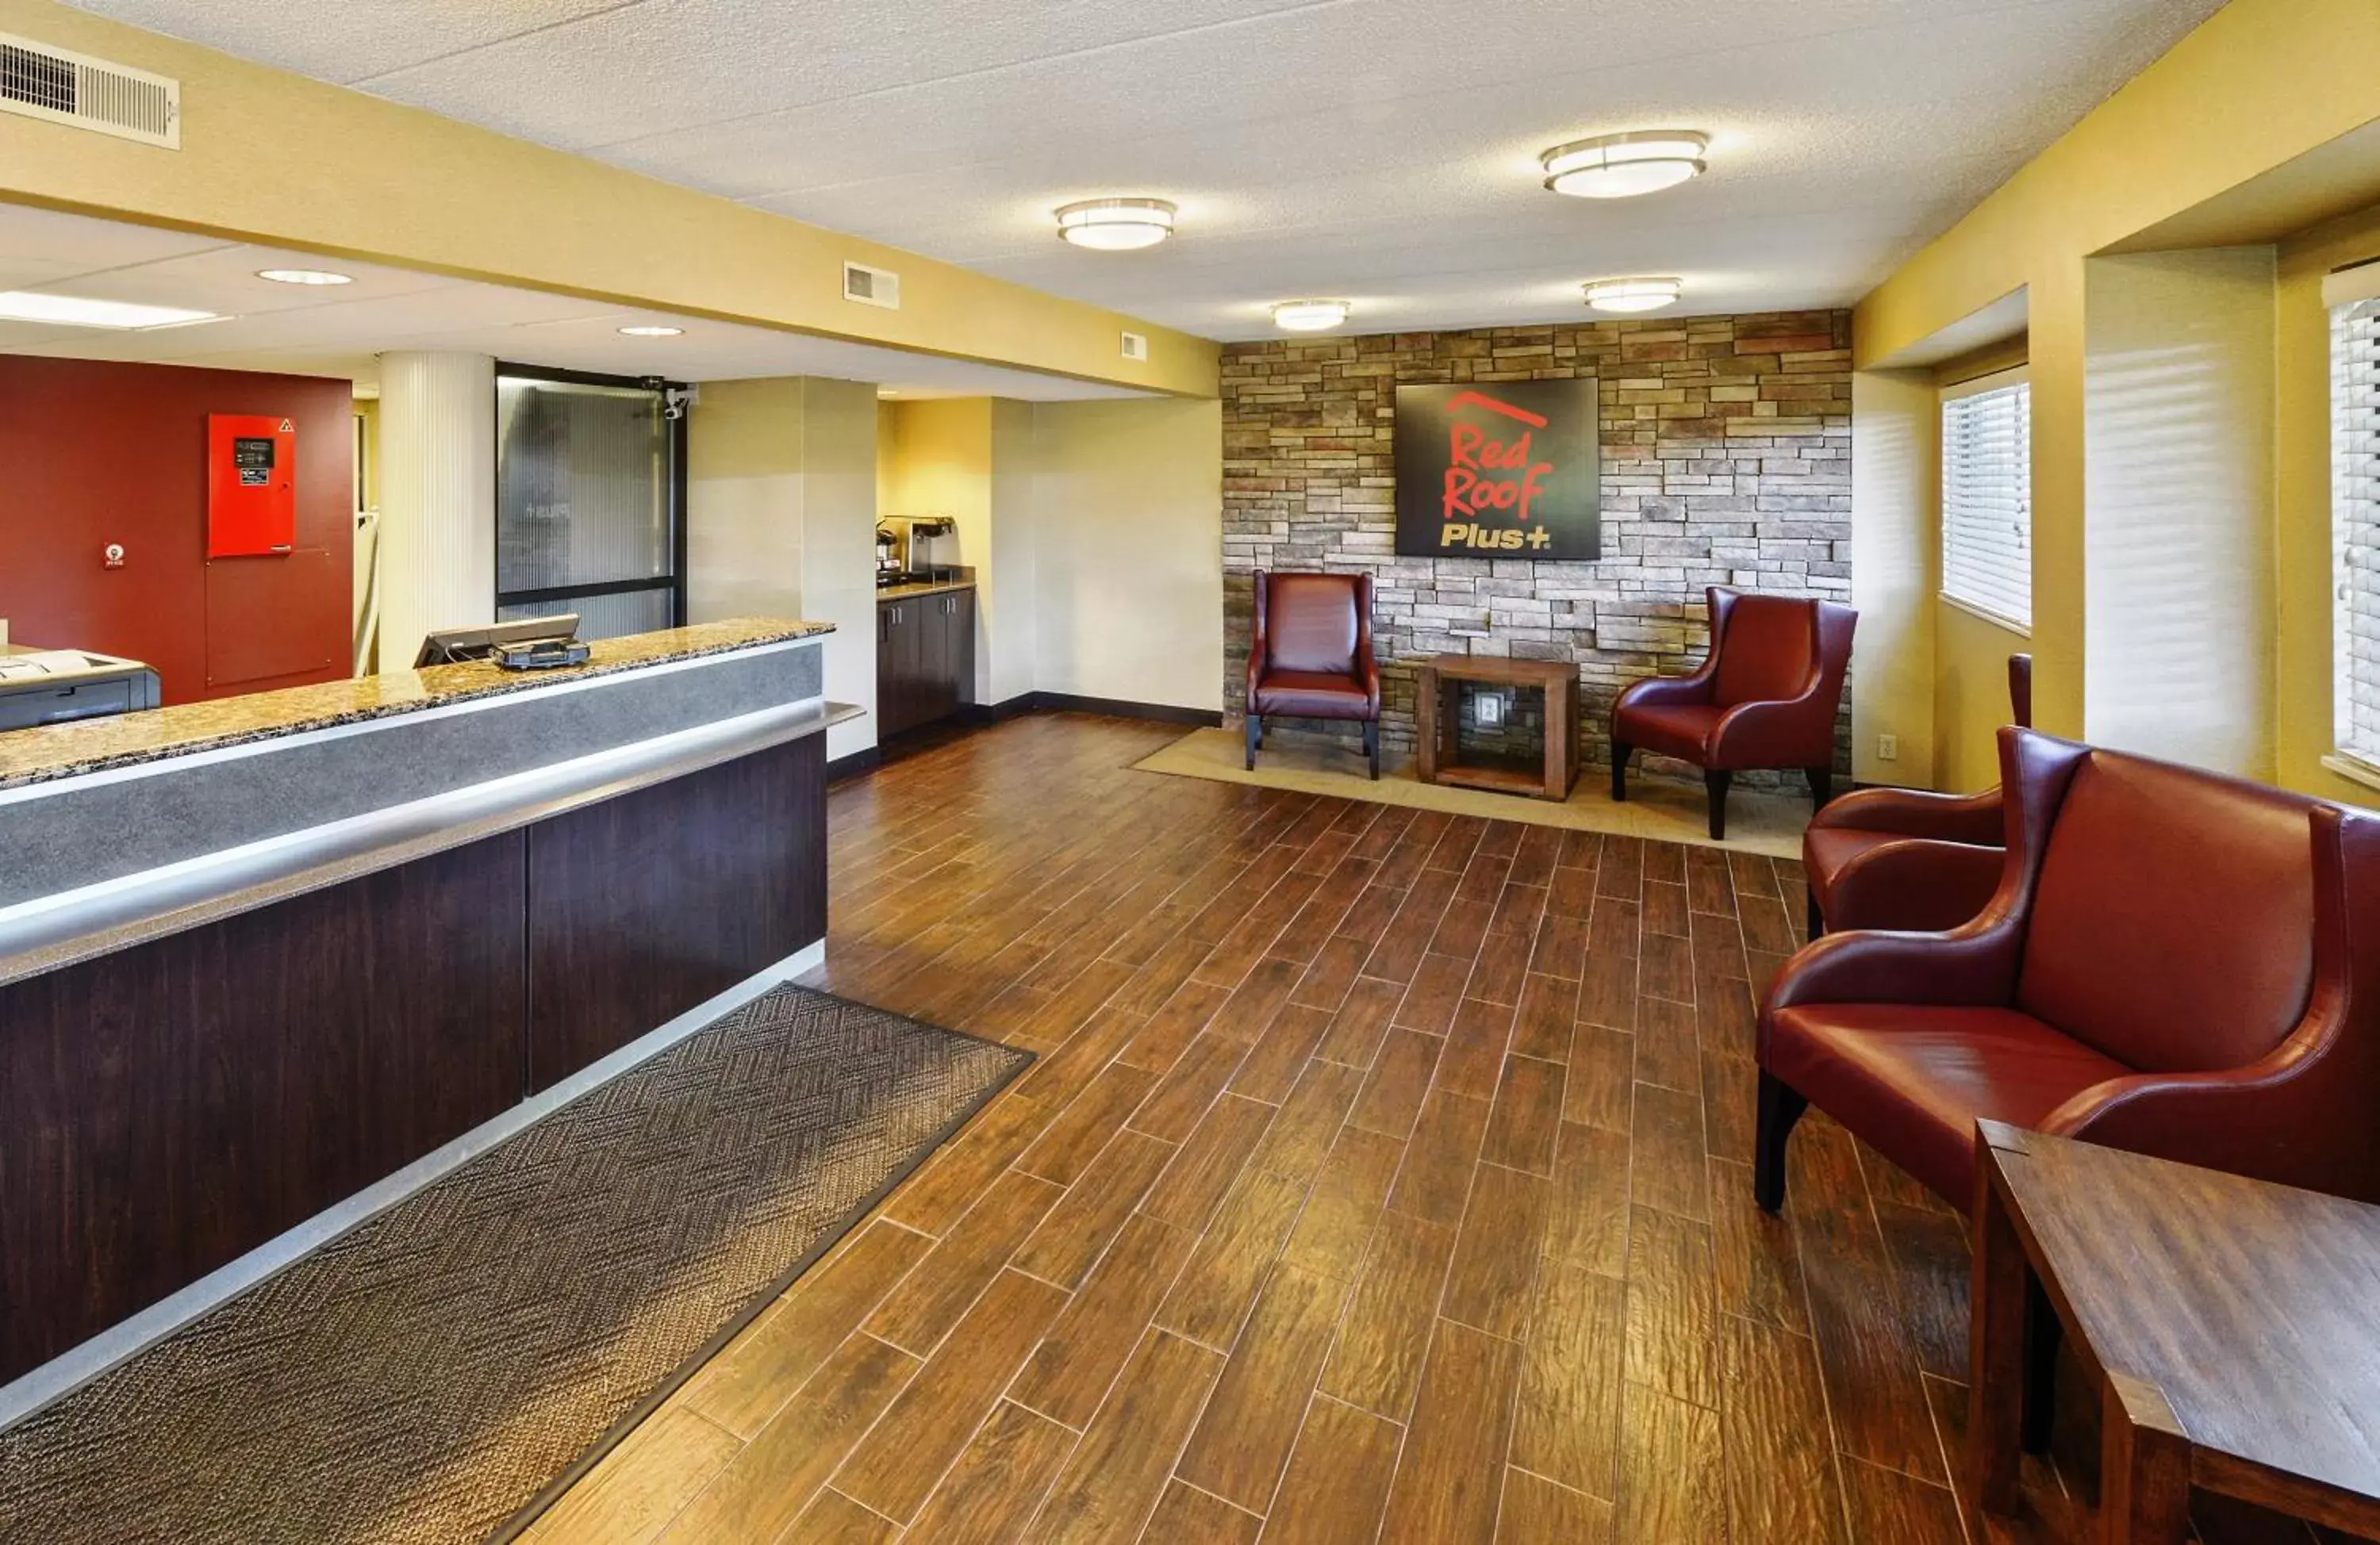 Lobby or reception, Lobby/Reception in Red Roof Inn PLUS+ Washington DC - Manassas